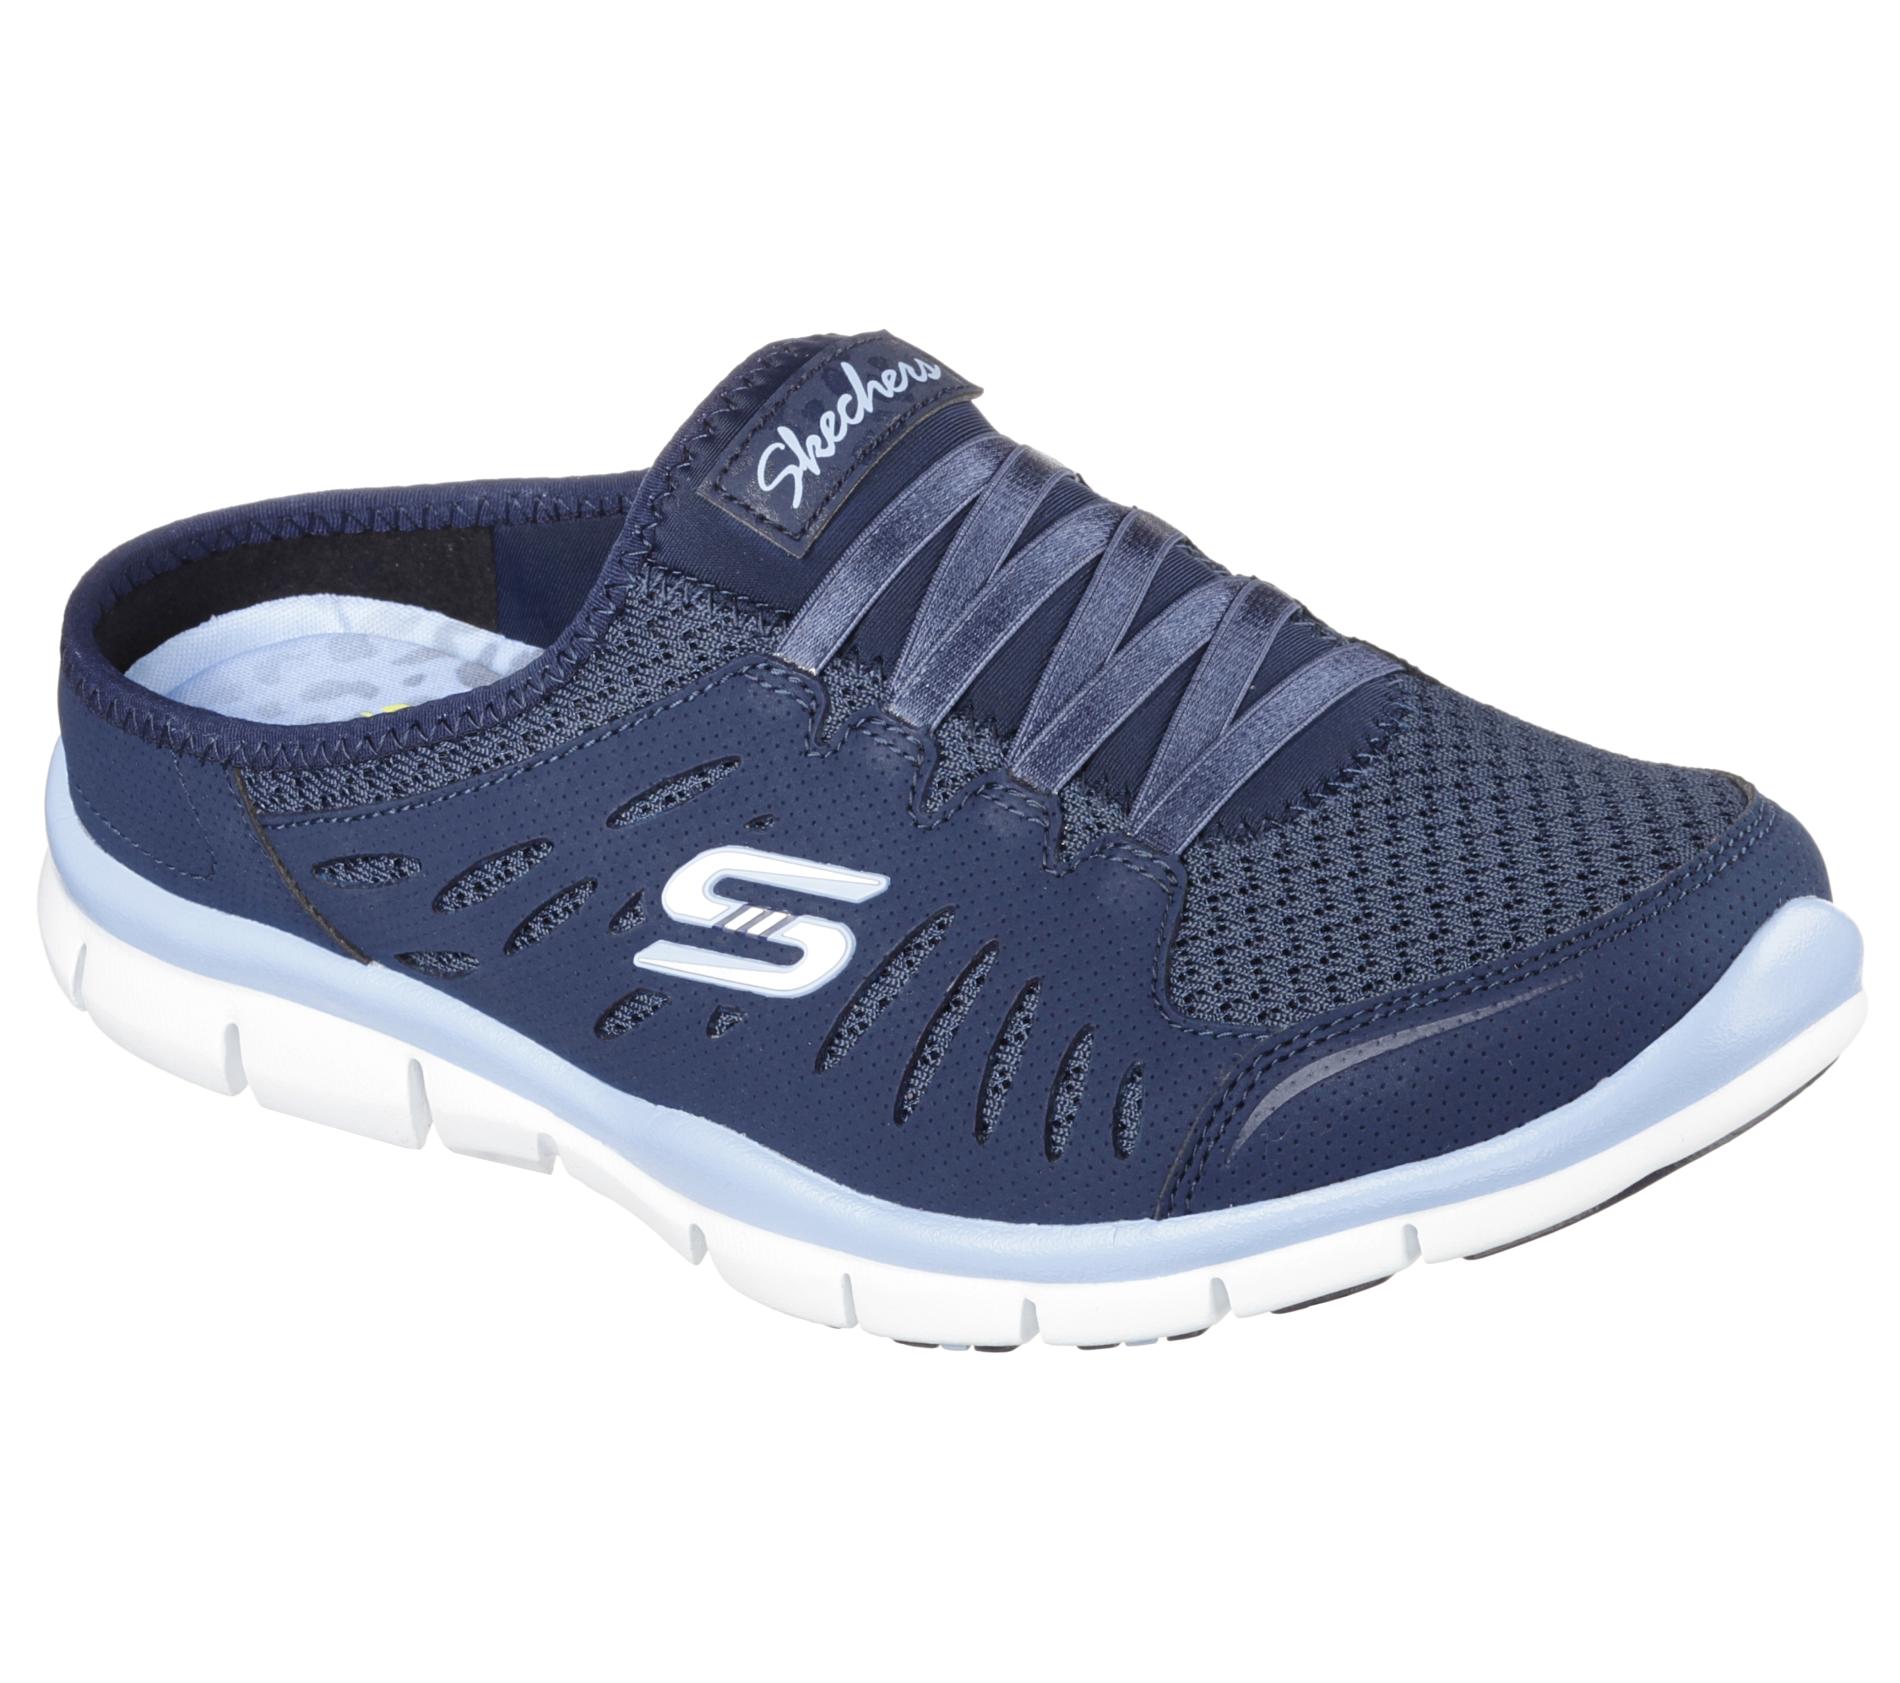 Skechers Women's No Limits Navy/Sky Blue Slip-On Athletic Shoe